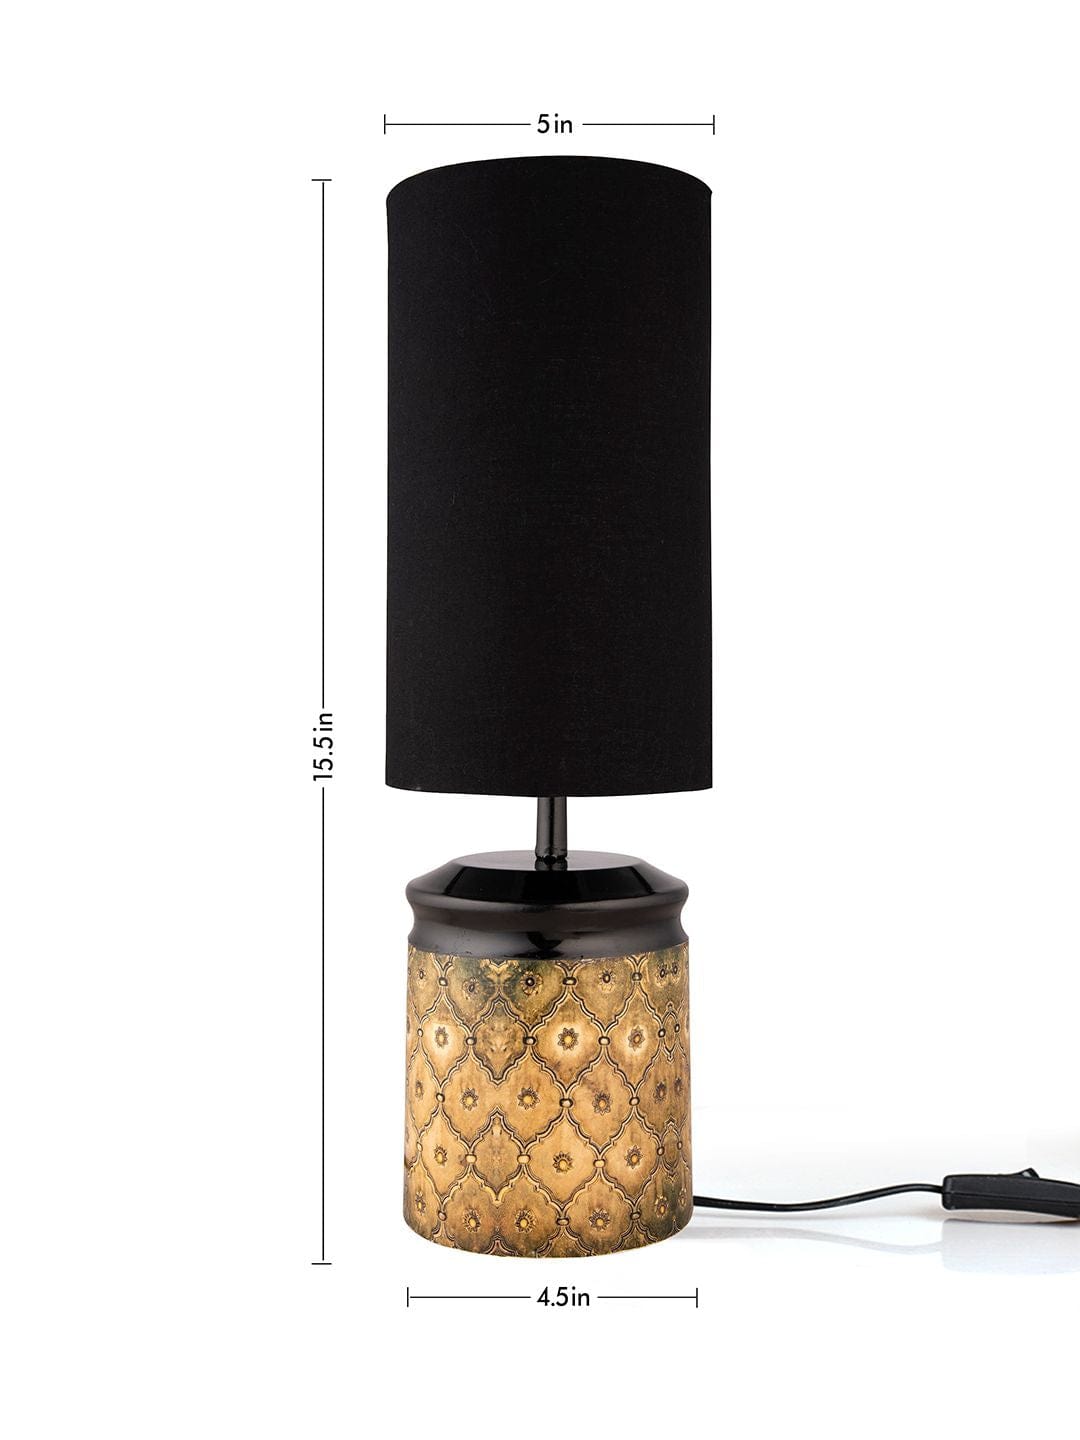 Metal Diamond Tile Print Lamp with Solid Black Shade